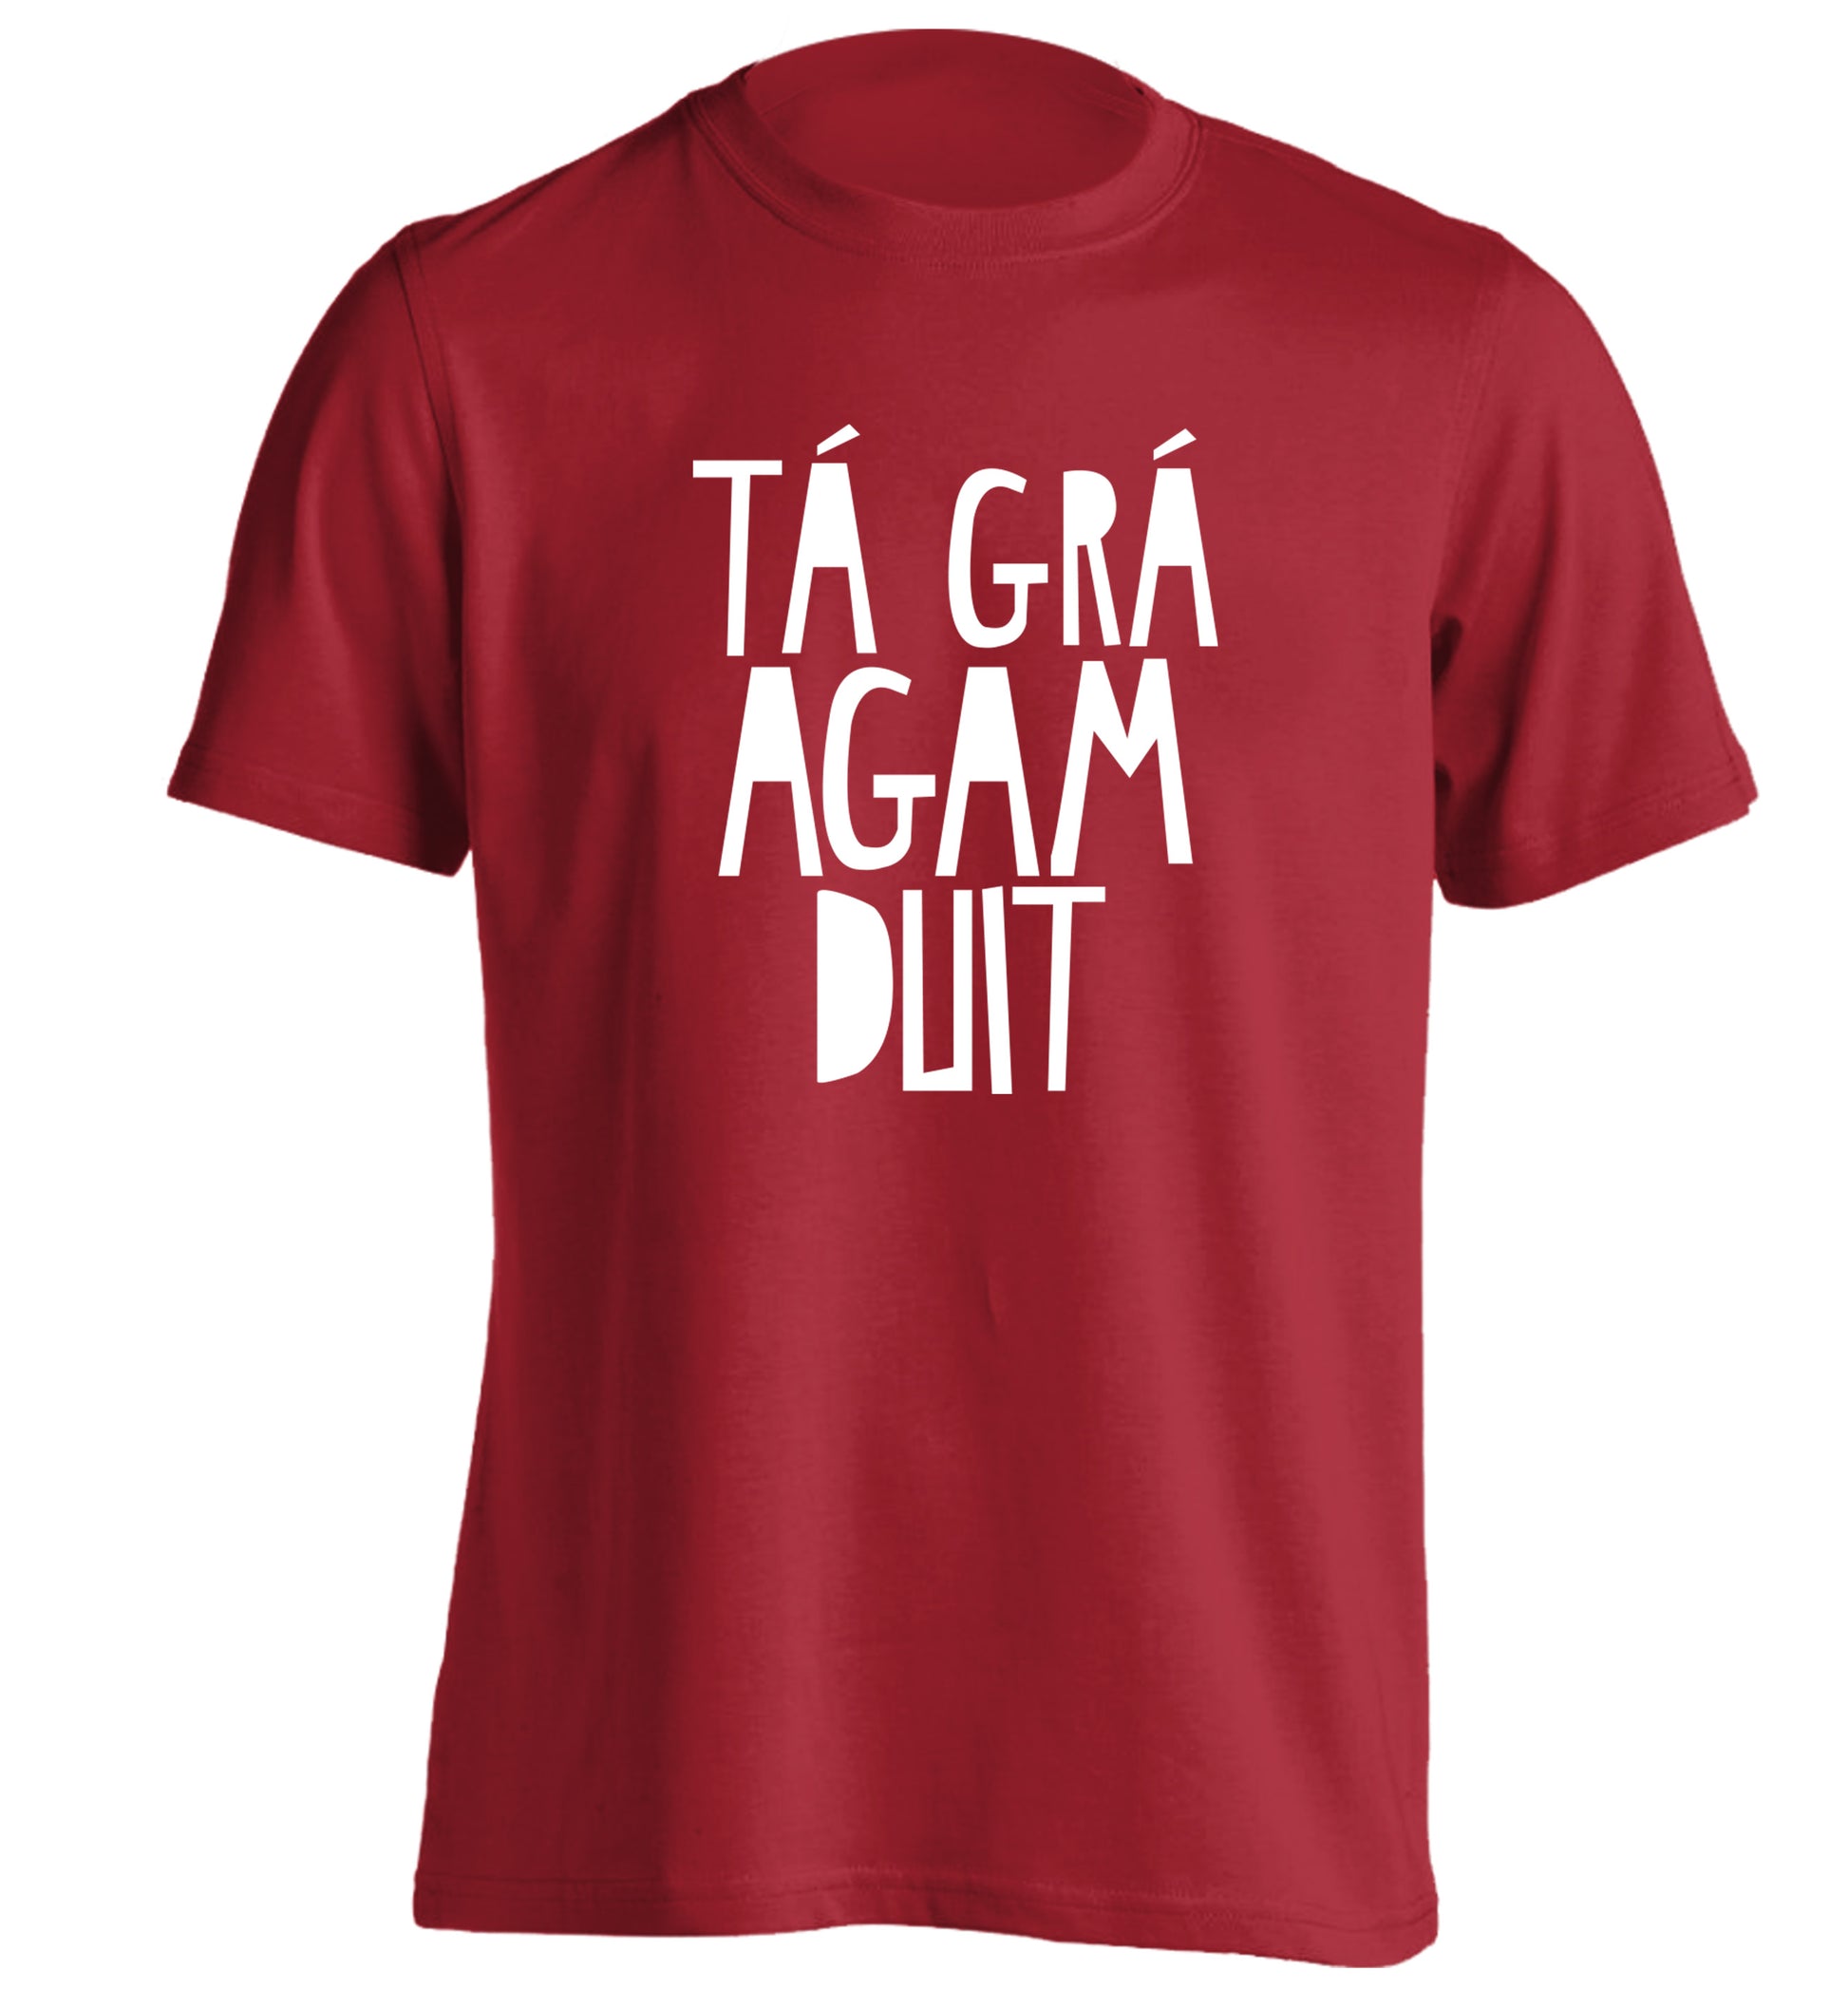 T‚Ä° gr‚Ä° agam duit - I love you adults unisex red Tshirt 2XL